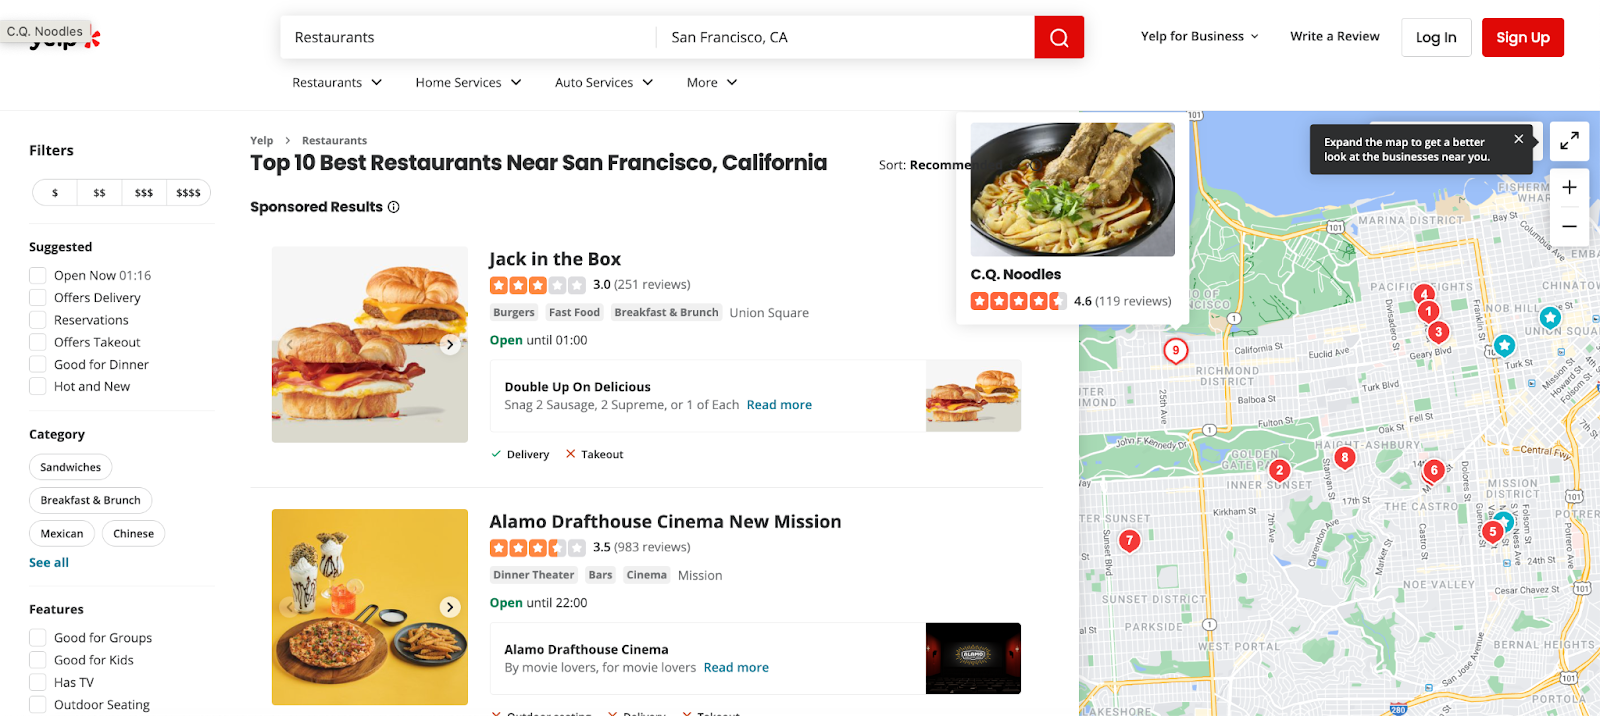 Yelp's "Top 10 best restaurants near San Francisco, California" page